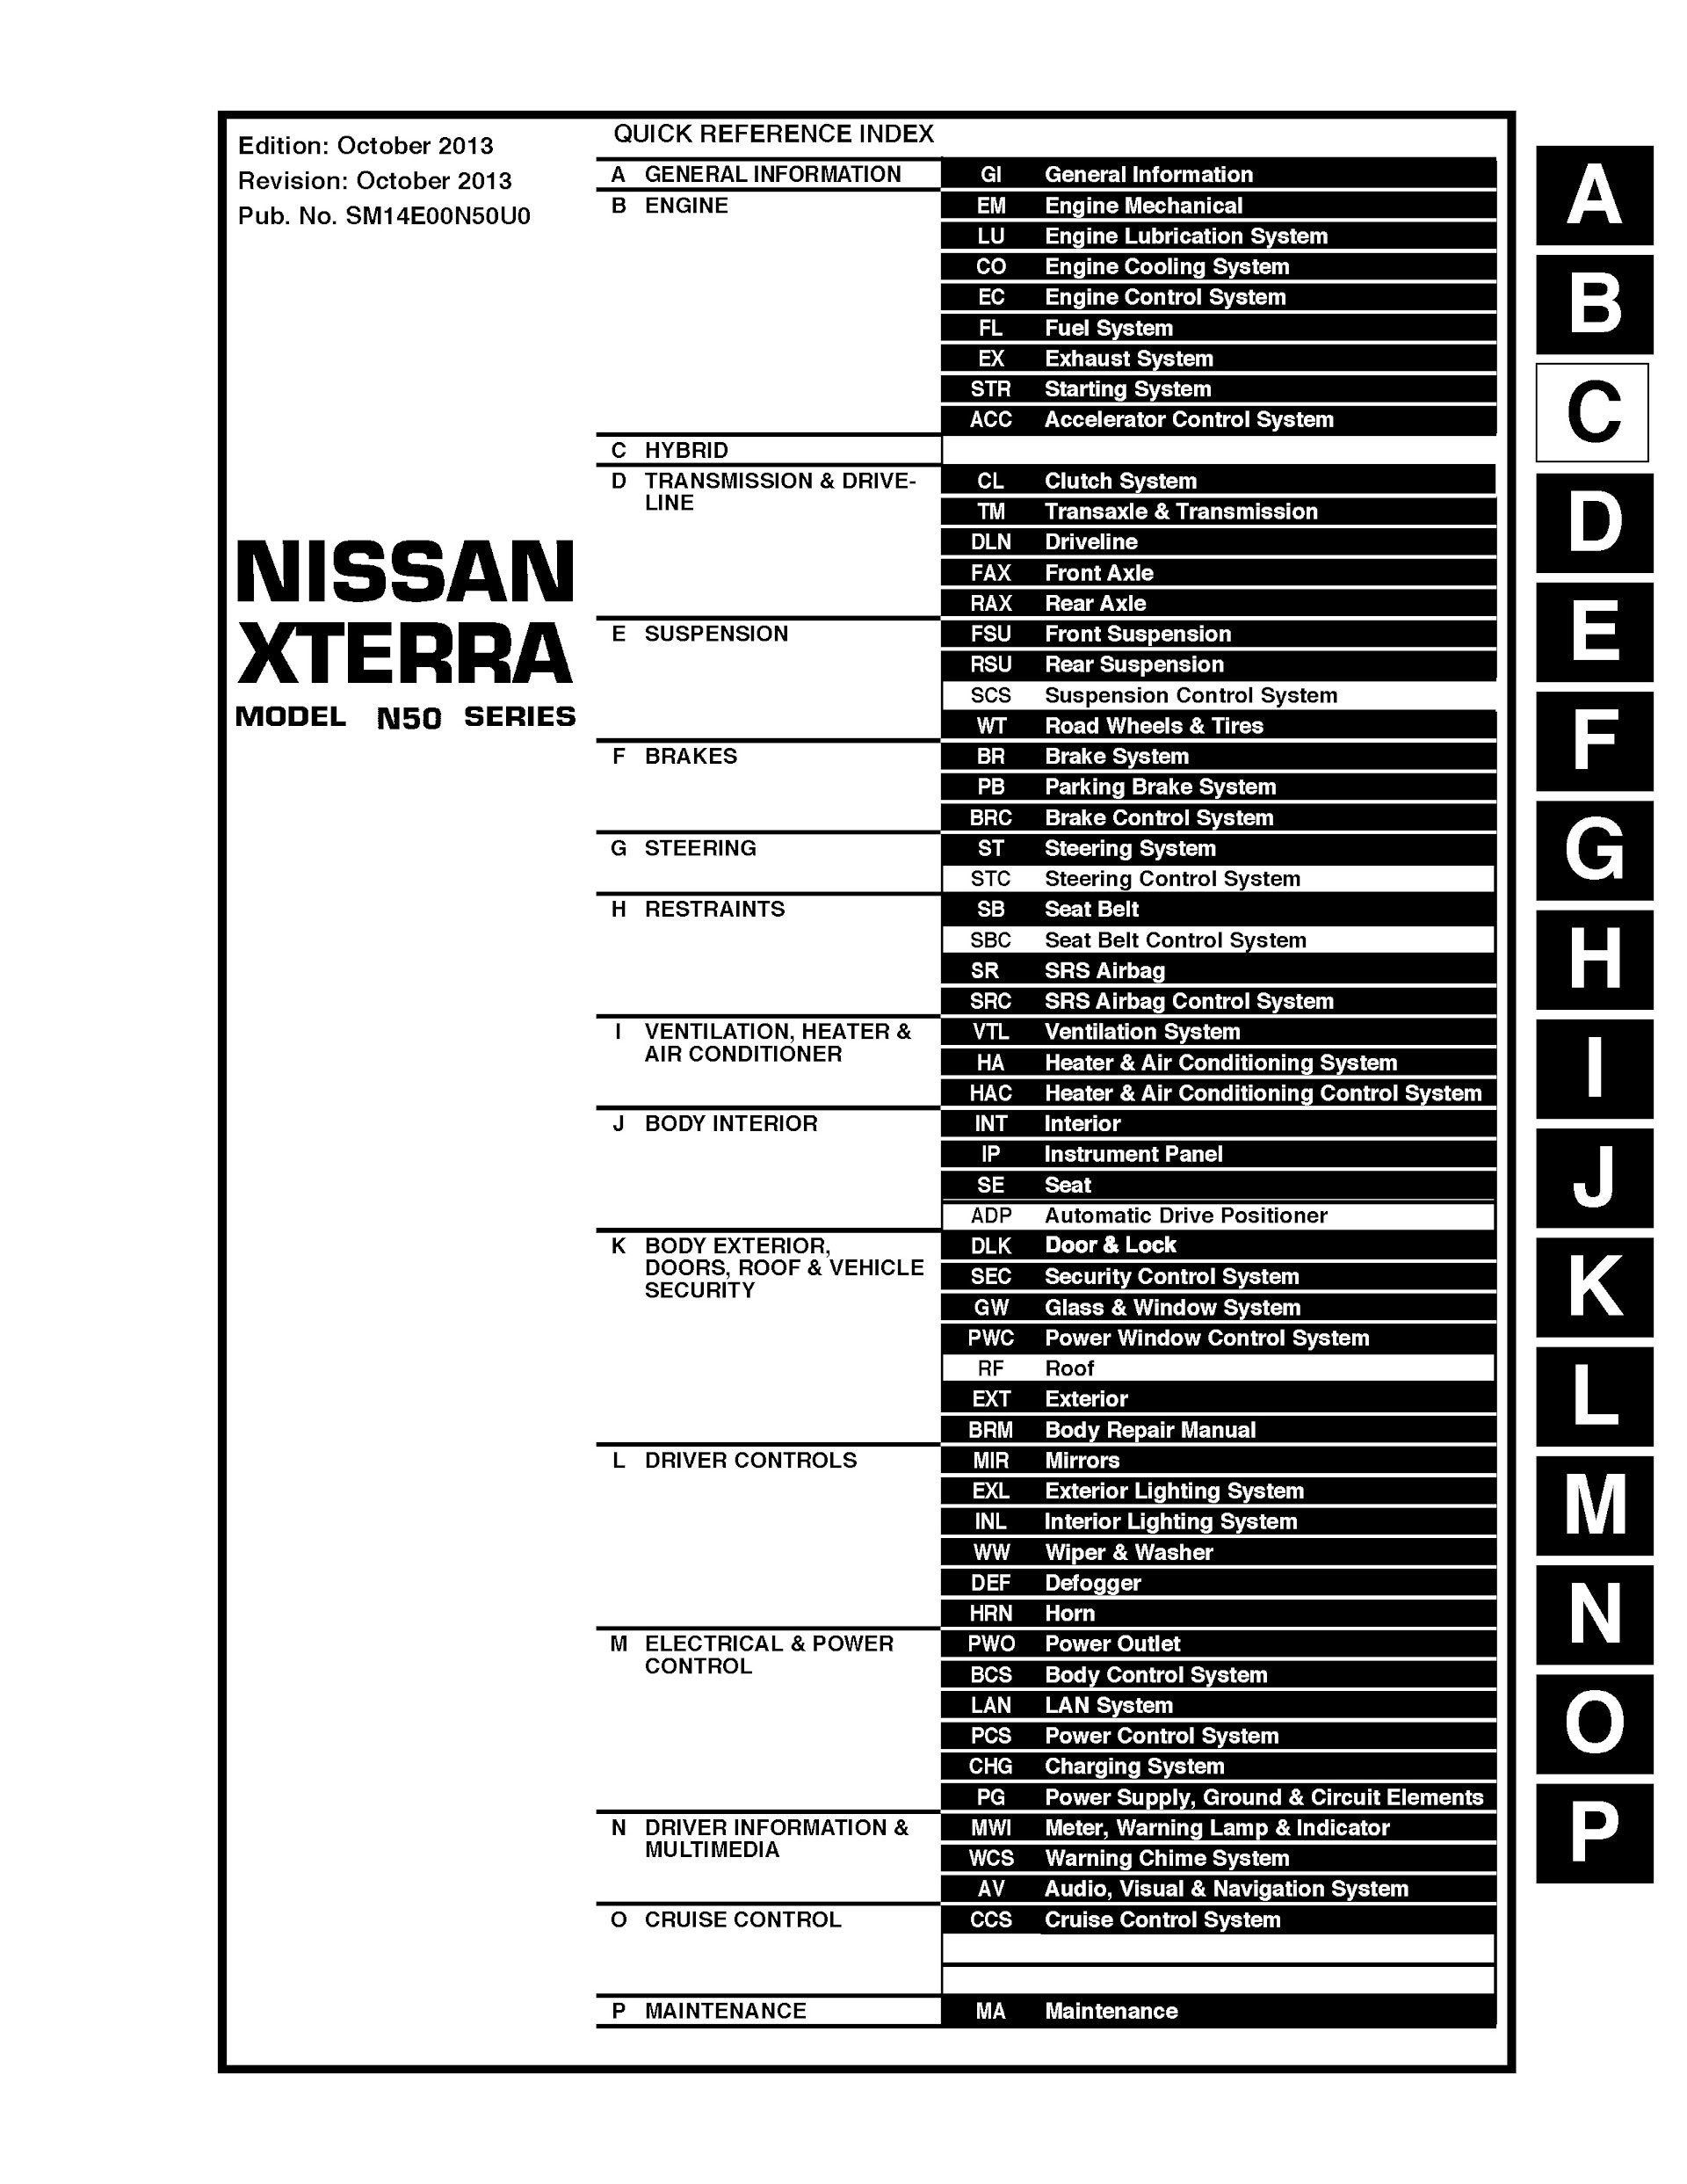 Table of Contents 2014 Nissan Xterra Repair Manual, Model N50 Series